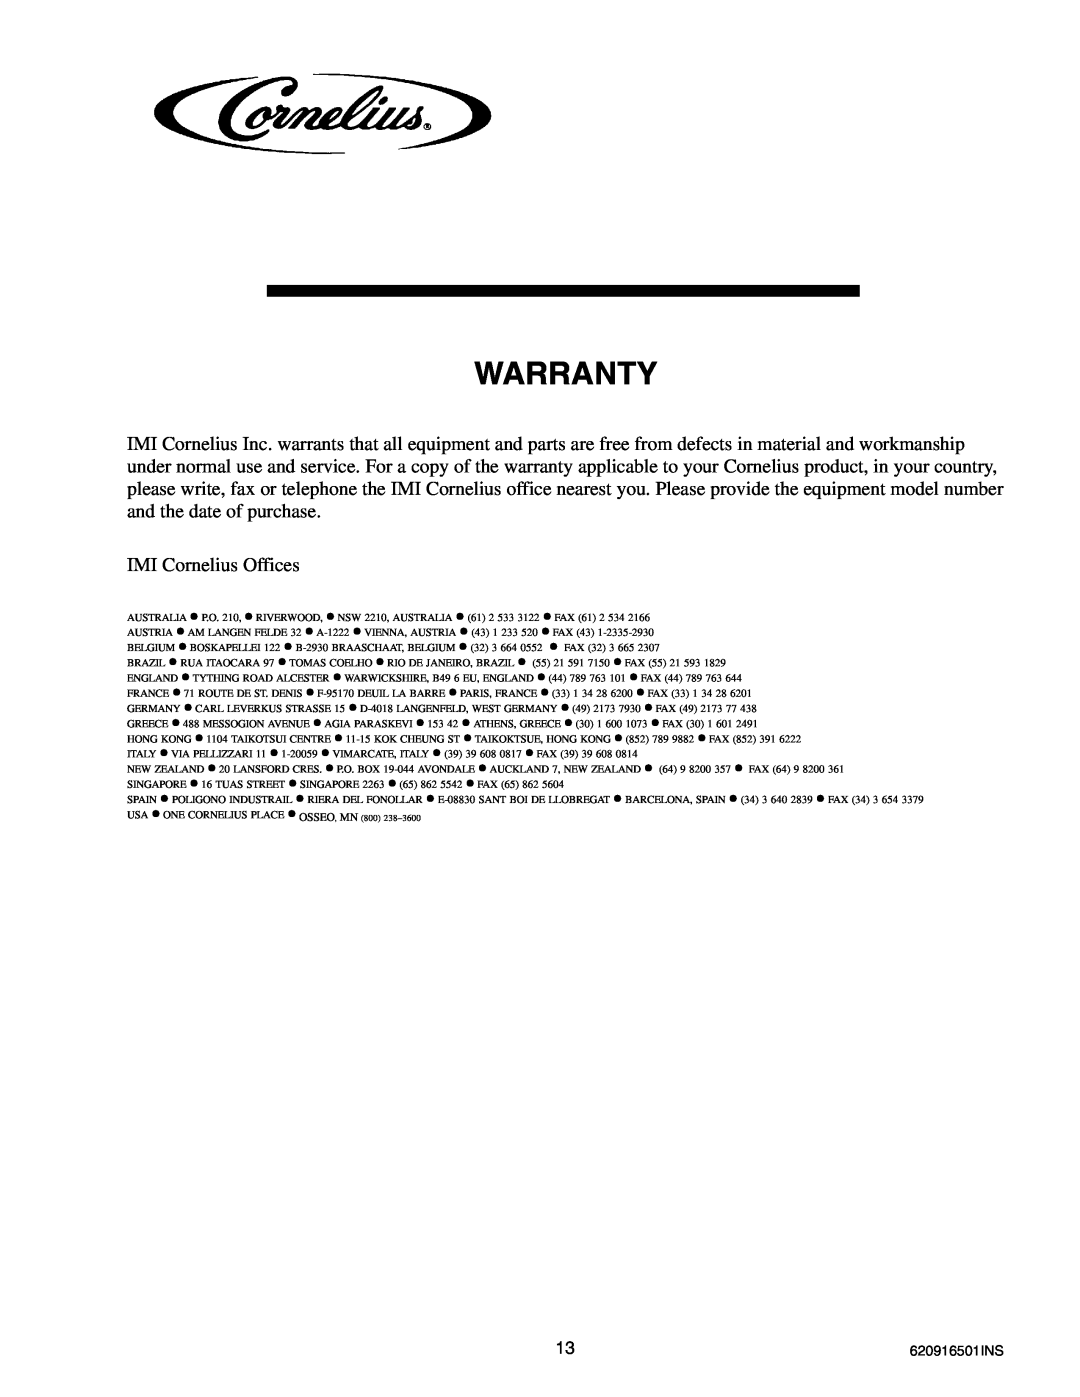 Cornelius ED-250 BCP installation manual Warranty, IMI Cornelius Offices, 620916501INS 